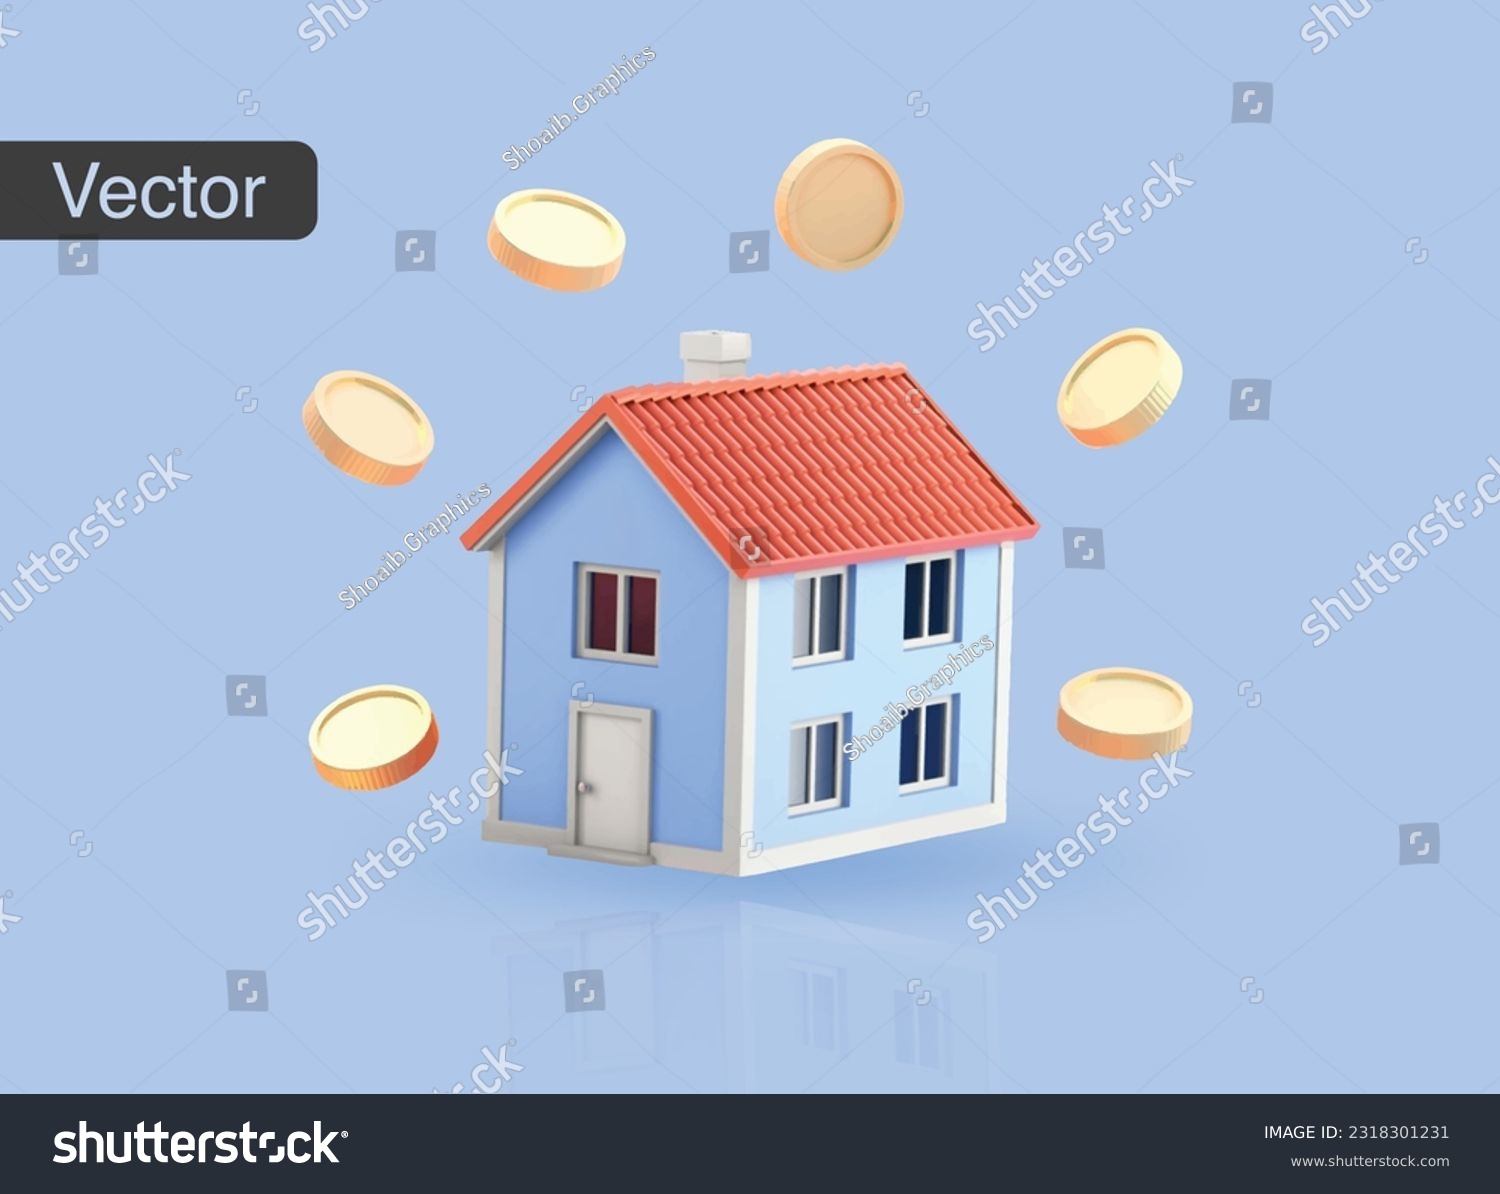 SVG of Real estate investment concept. Stack of coins and house model on blue background. 3d vector illustration svg